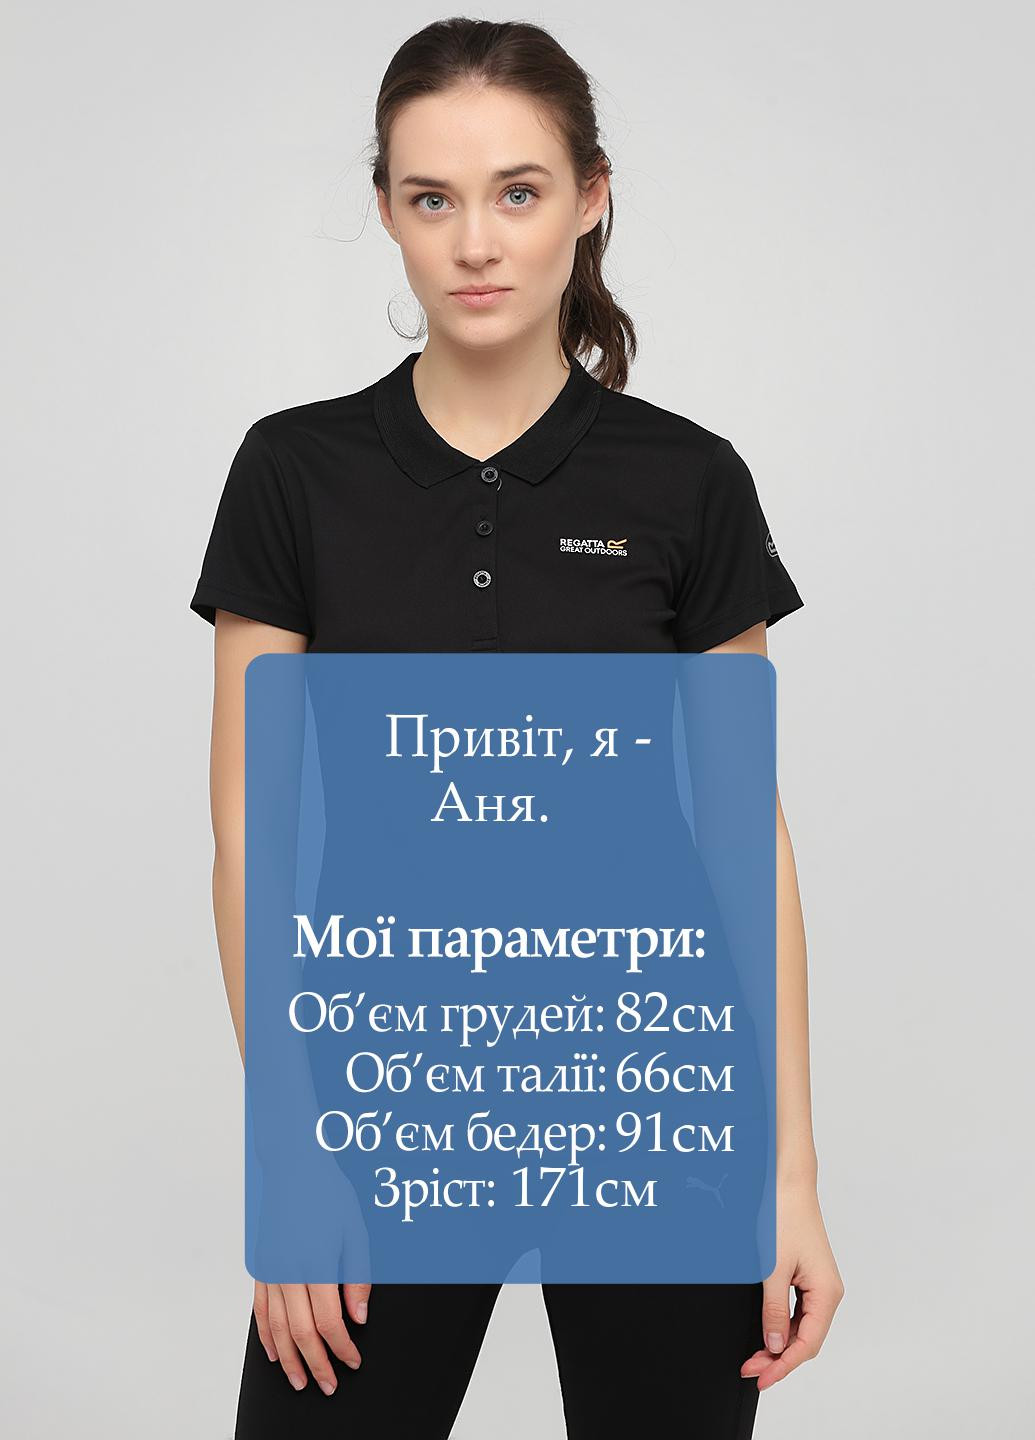 Темно-бежевая женская футболка-футболка Regatta с логотипом